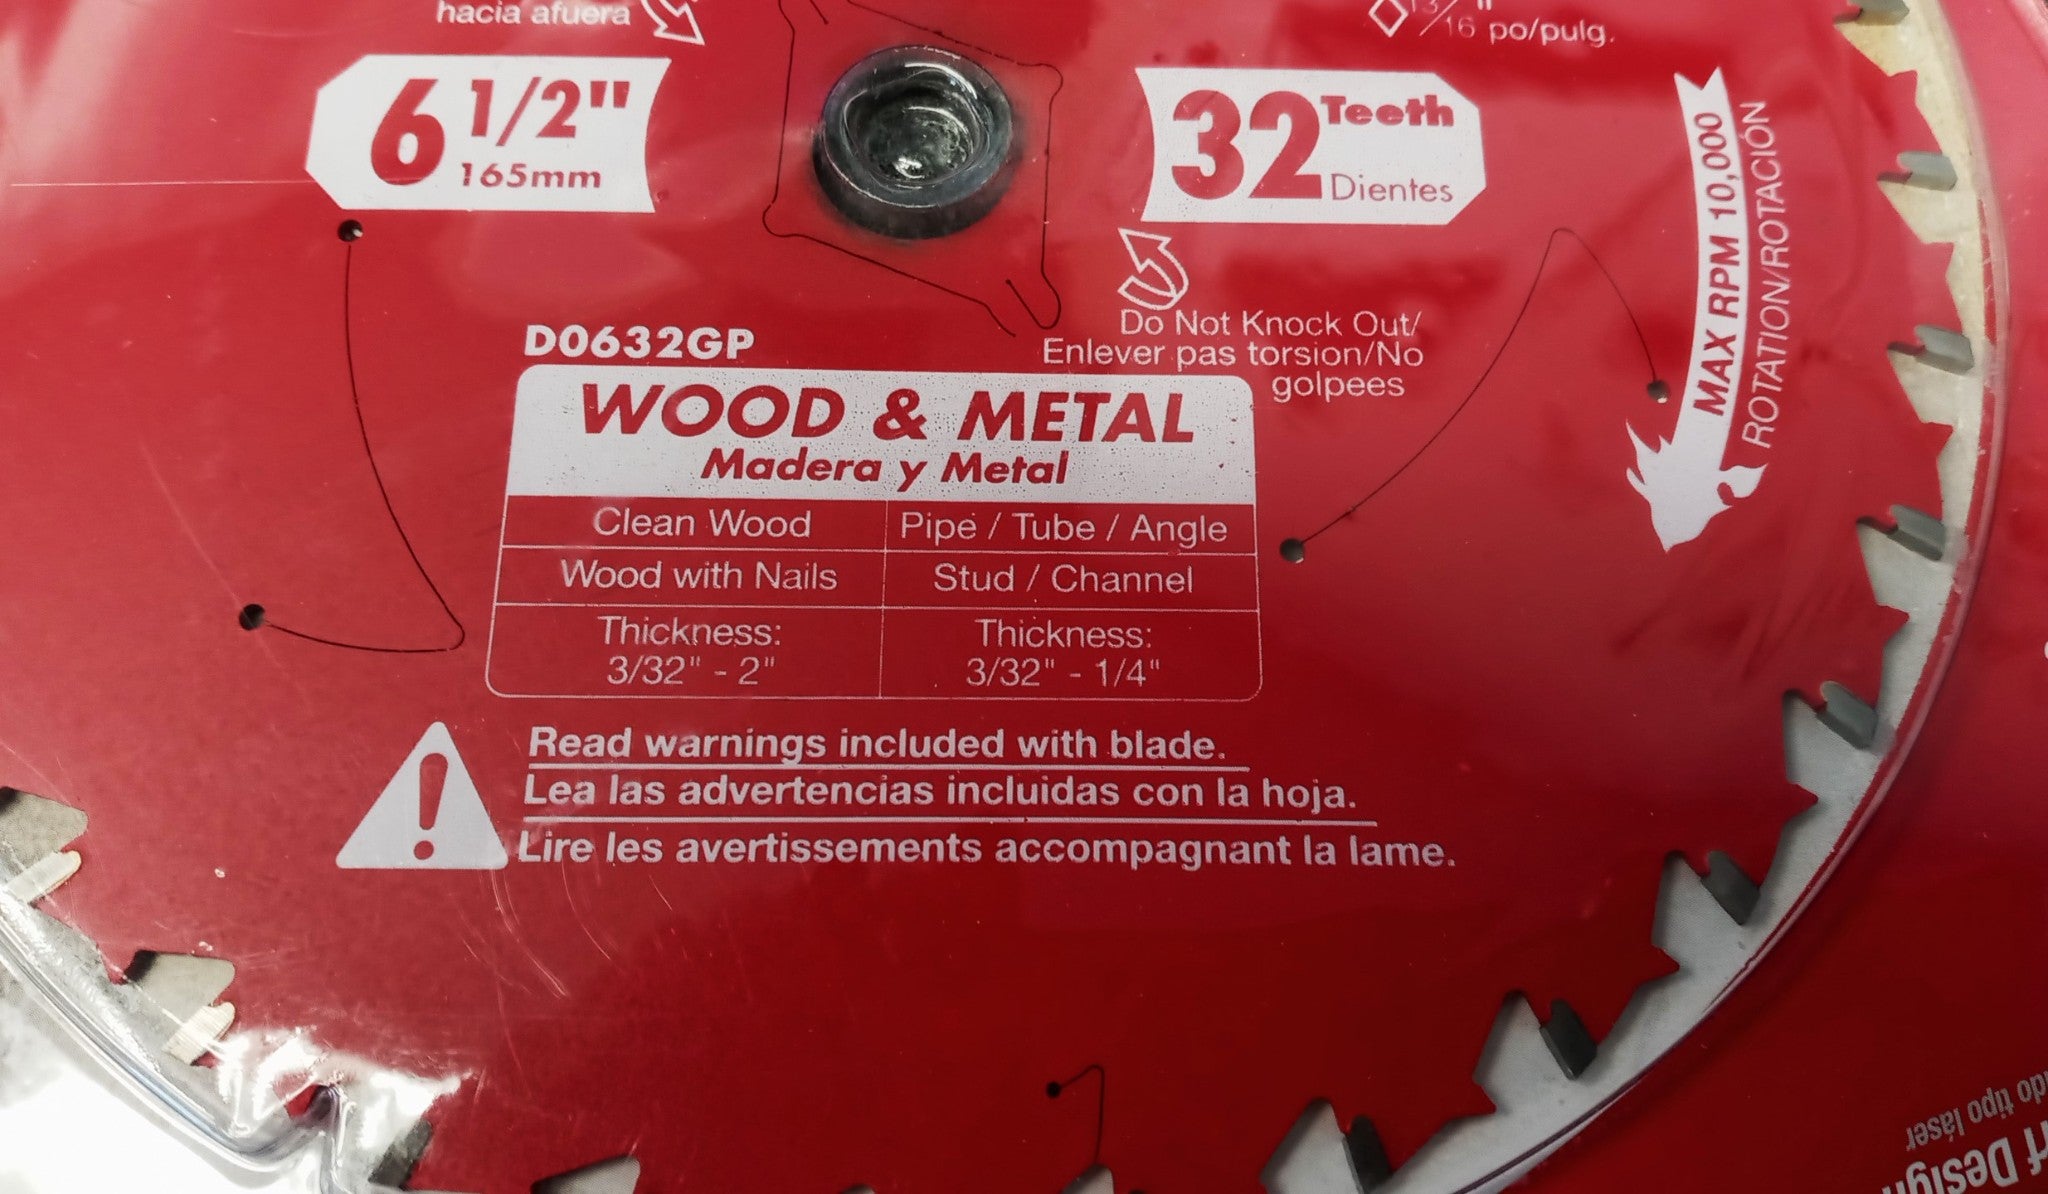 Diablo D0632GP 6-1/2" x 32 Tooth Wood & Metal Cutting Saw Blade Italy